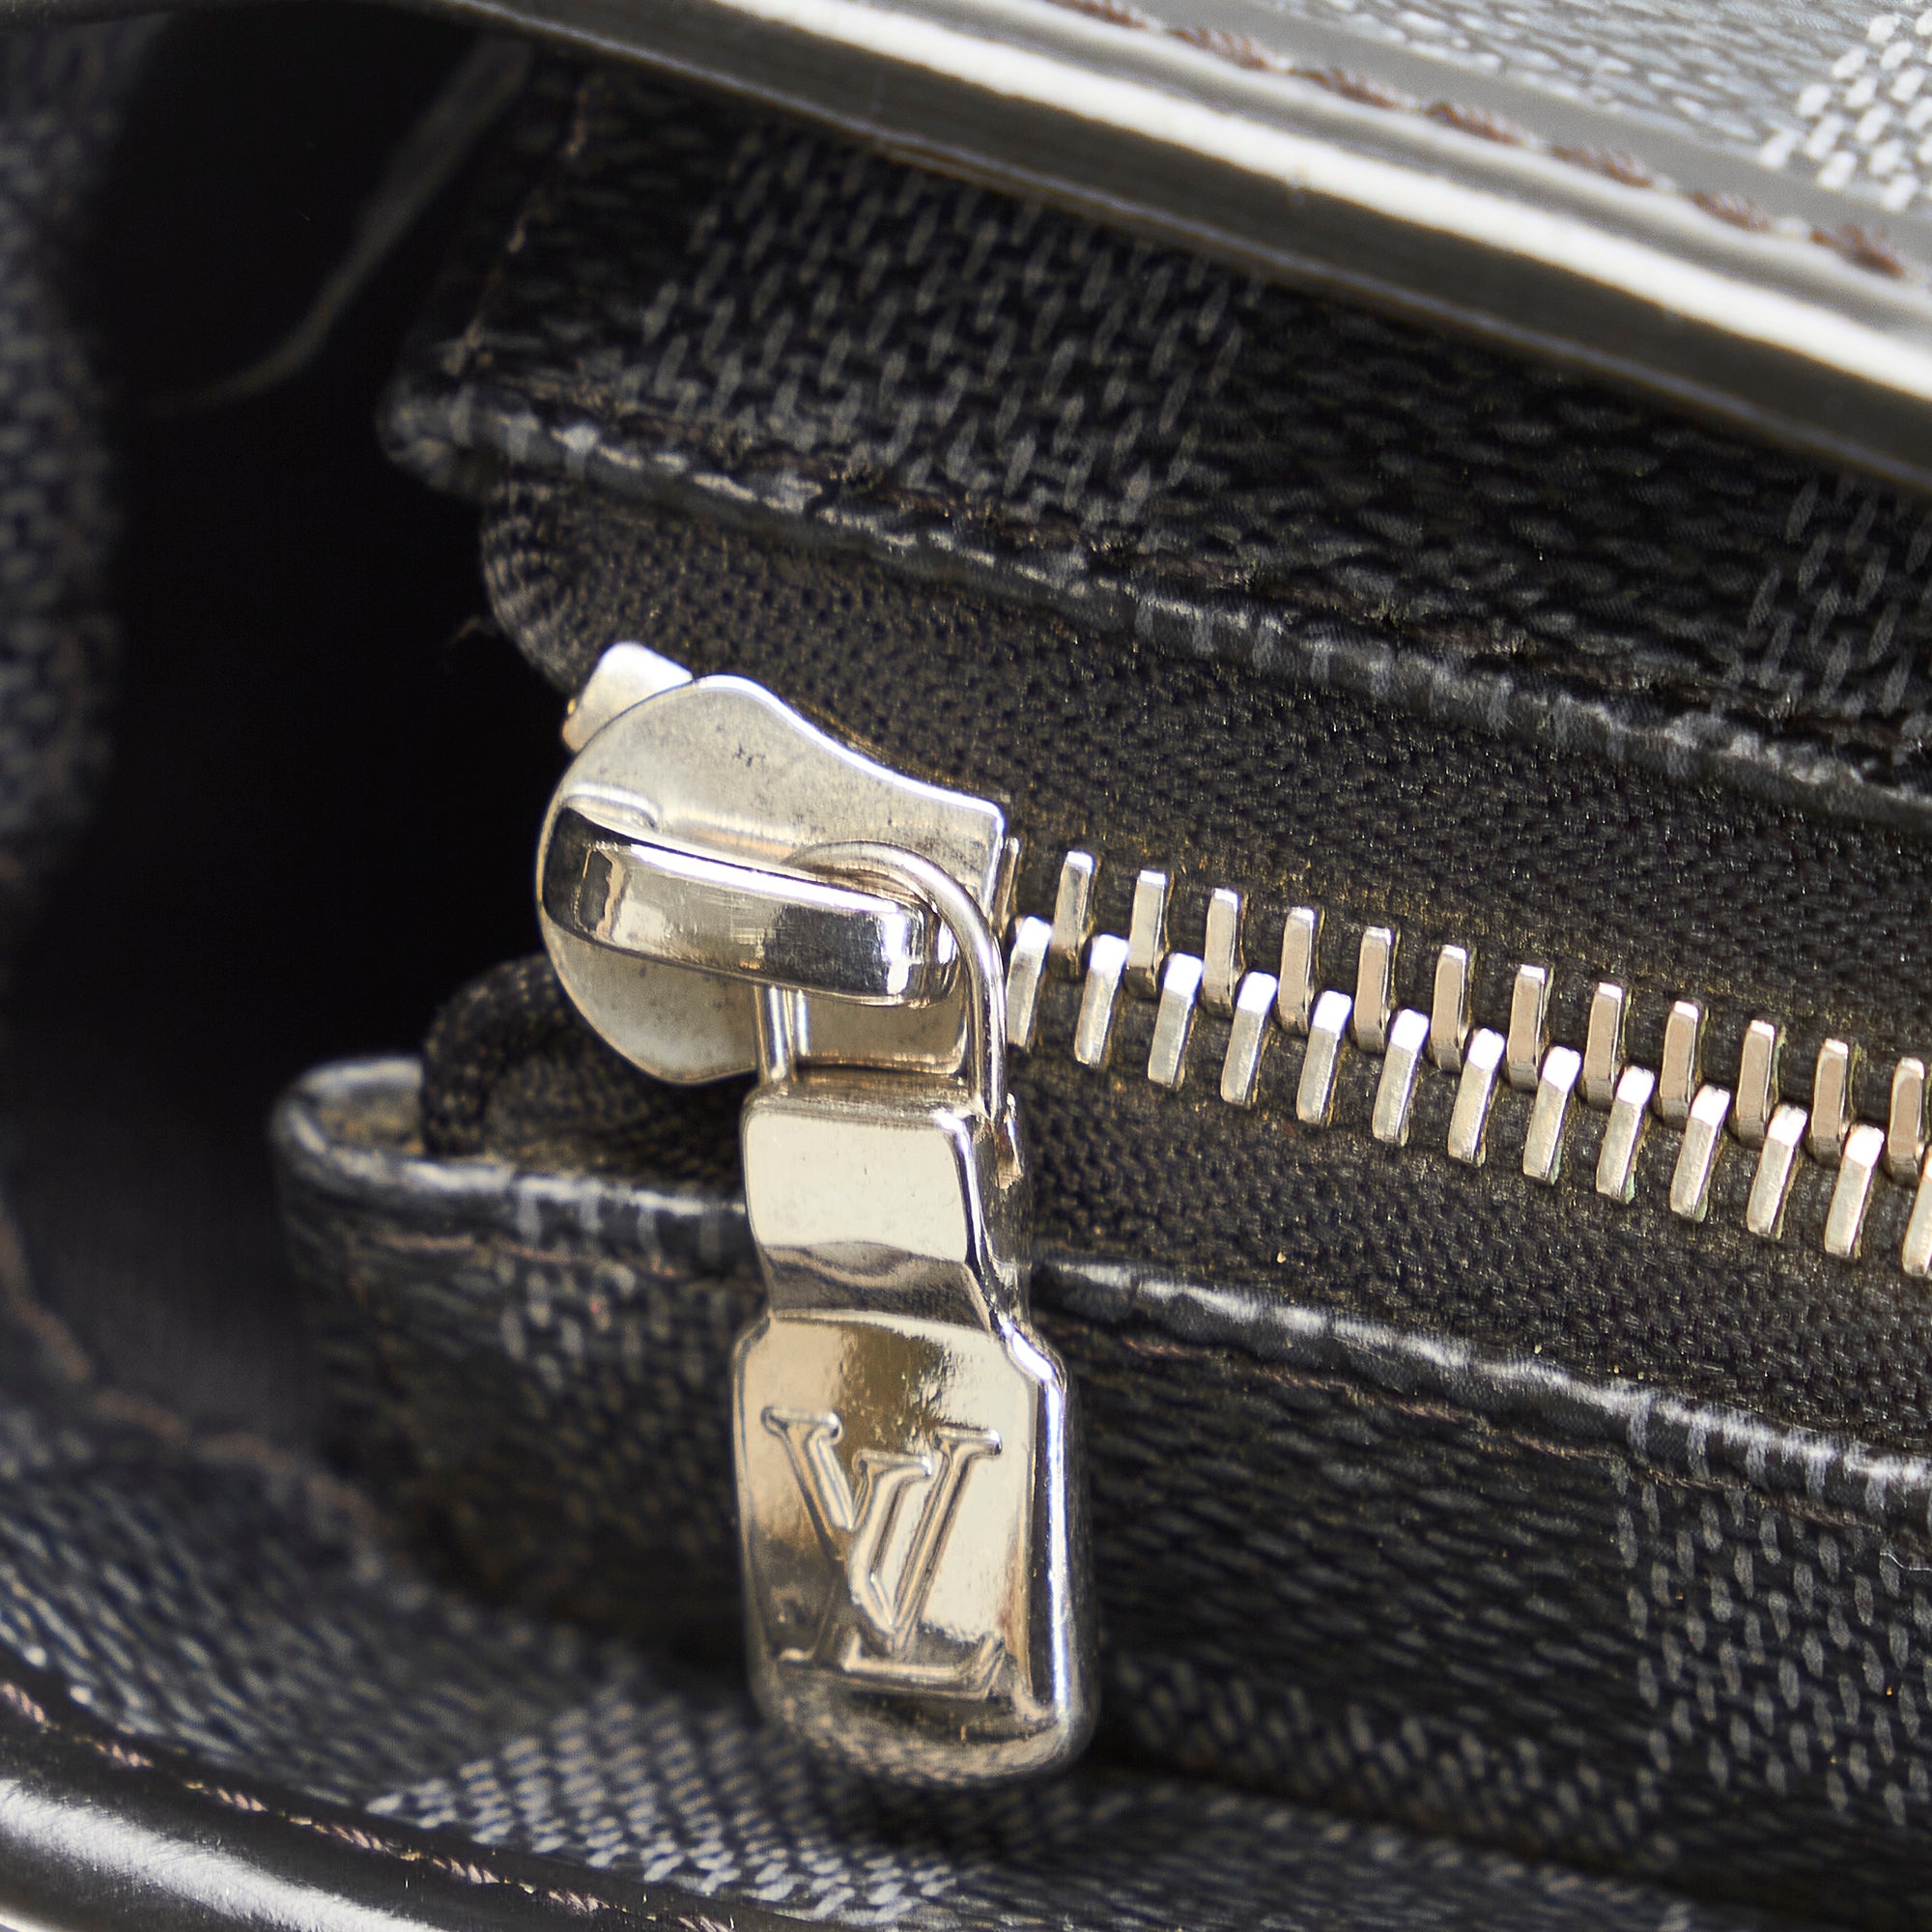 Louis Vuitton Damier Graphite Tadao PM Tote, Louis Vuitton Handbags